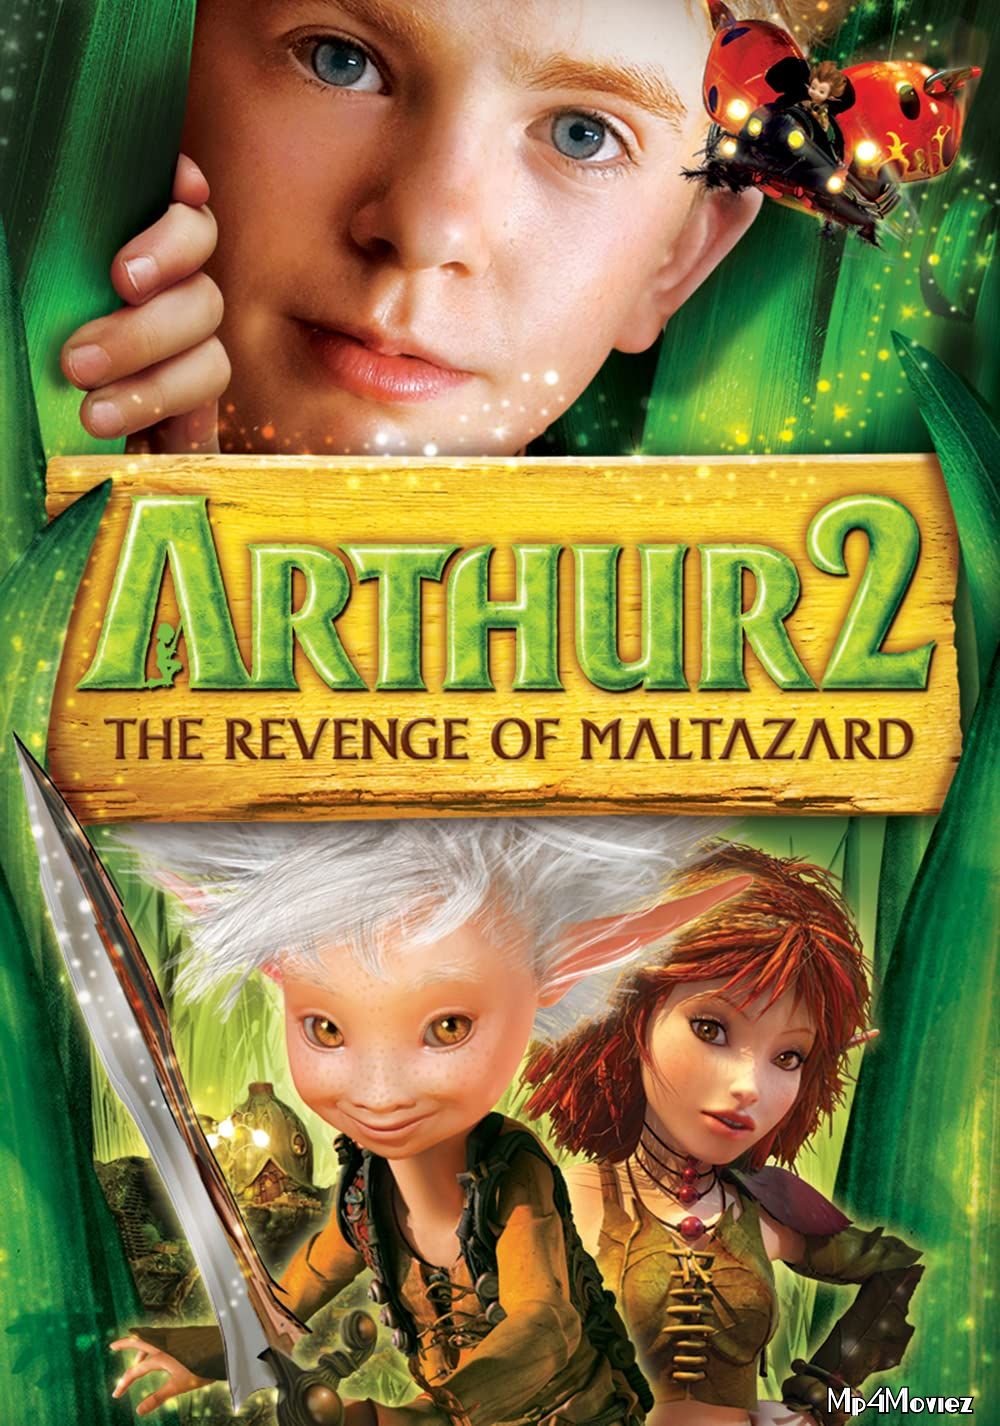 Arthur et la vengeance de Maltazard (2009) Hindi Dubbed BluRay download full movie